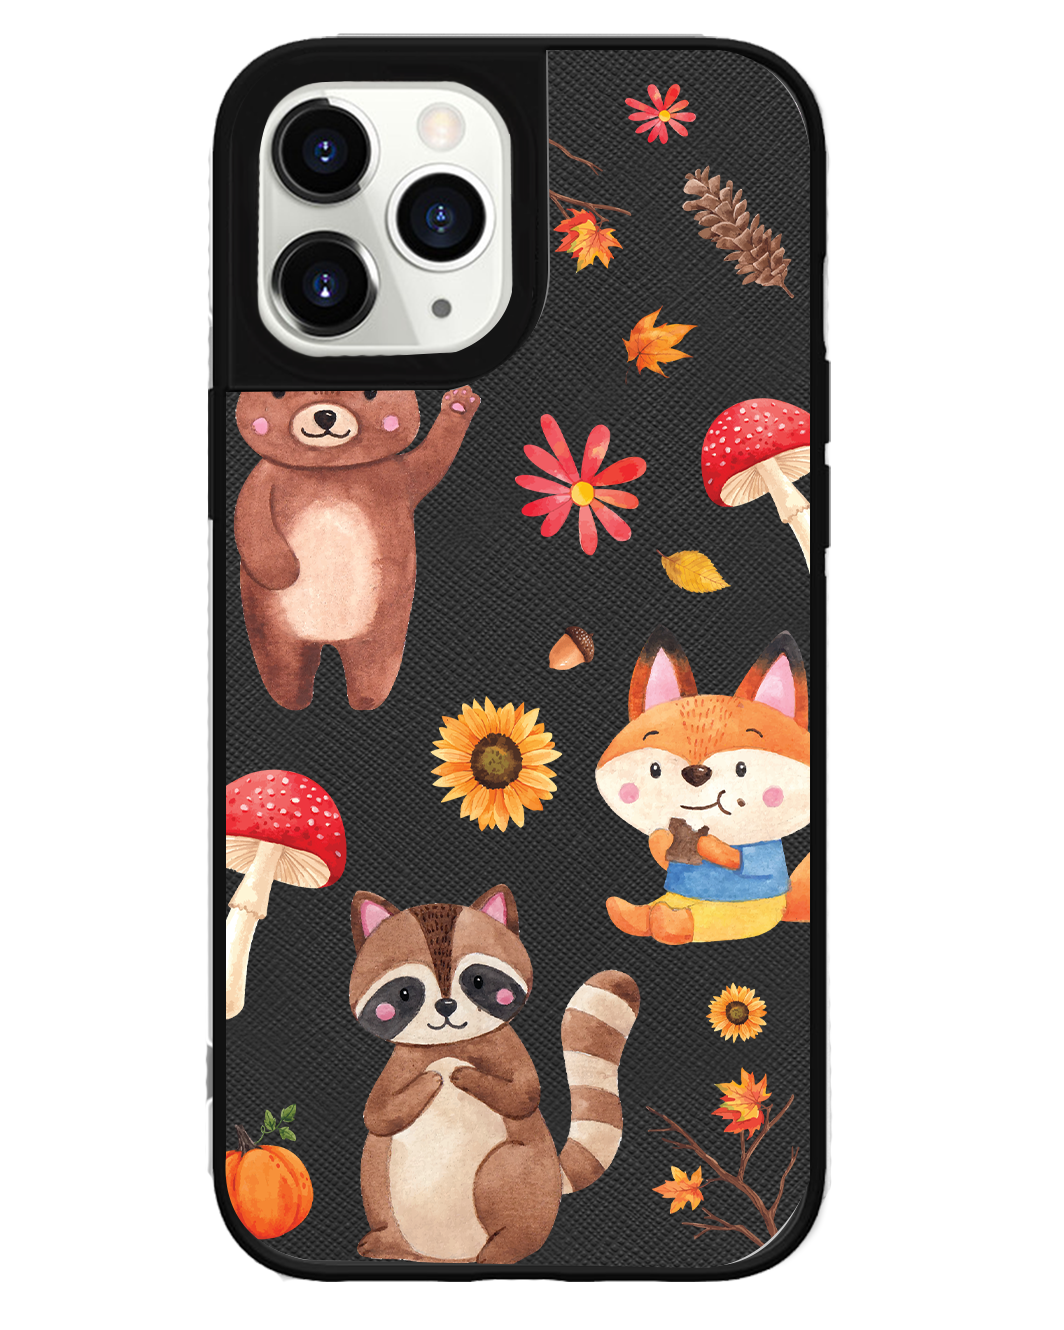 iPhone Leather Grip Case - Autumn Animals